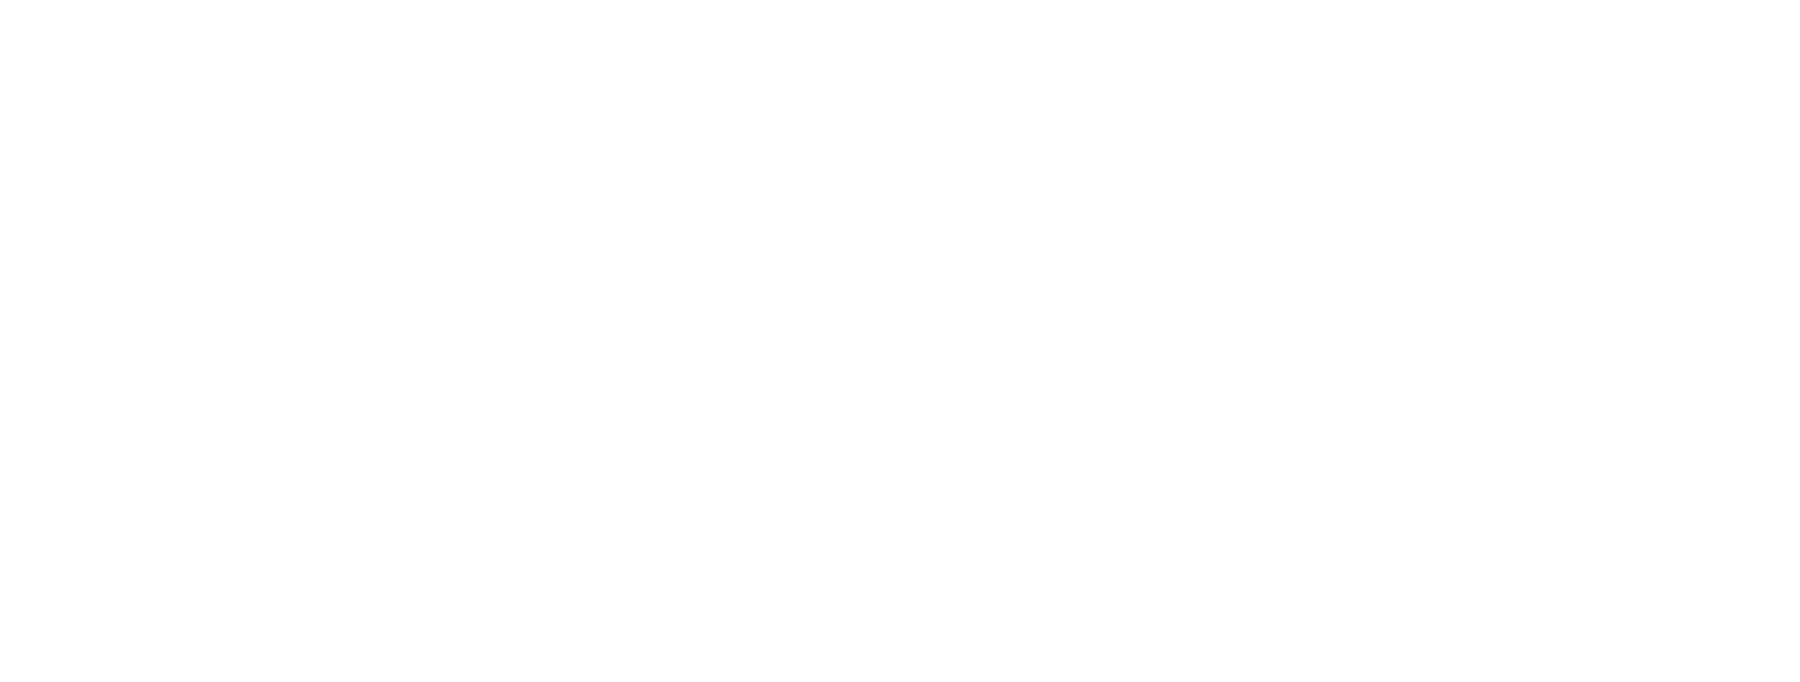 First Baptist Church of Christ